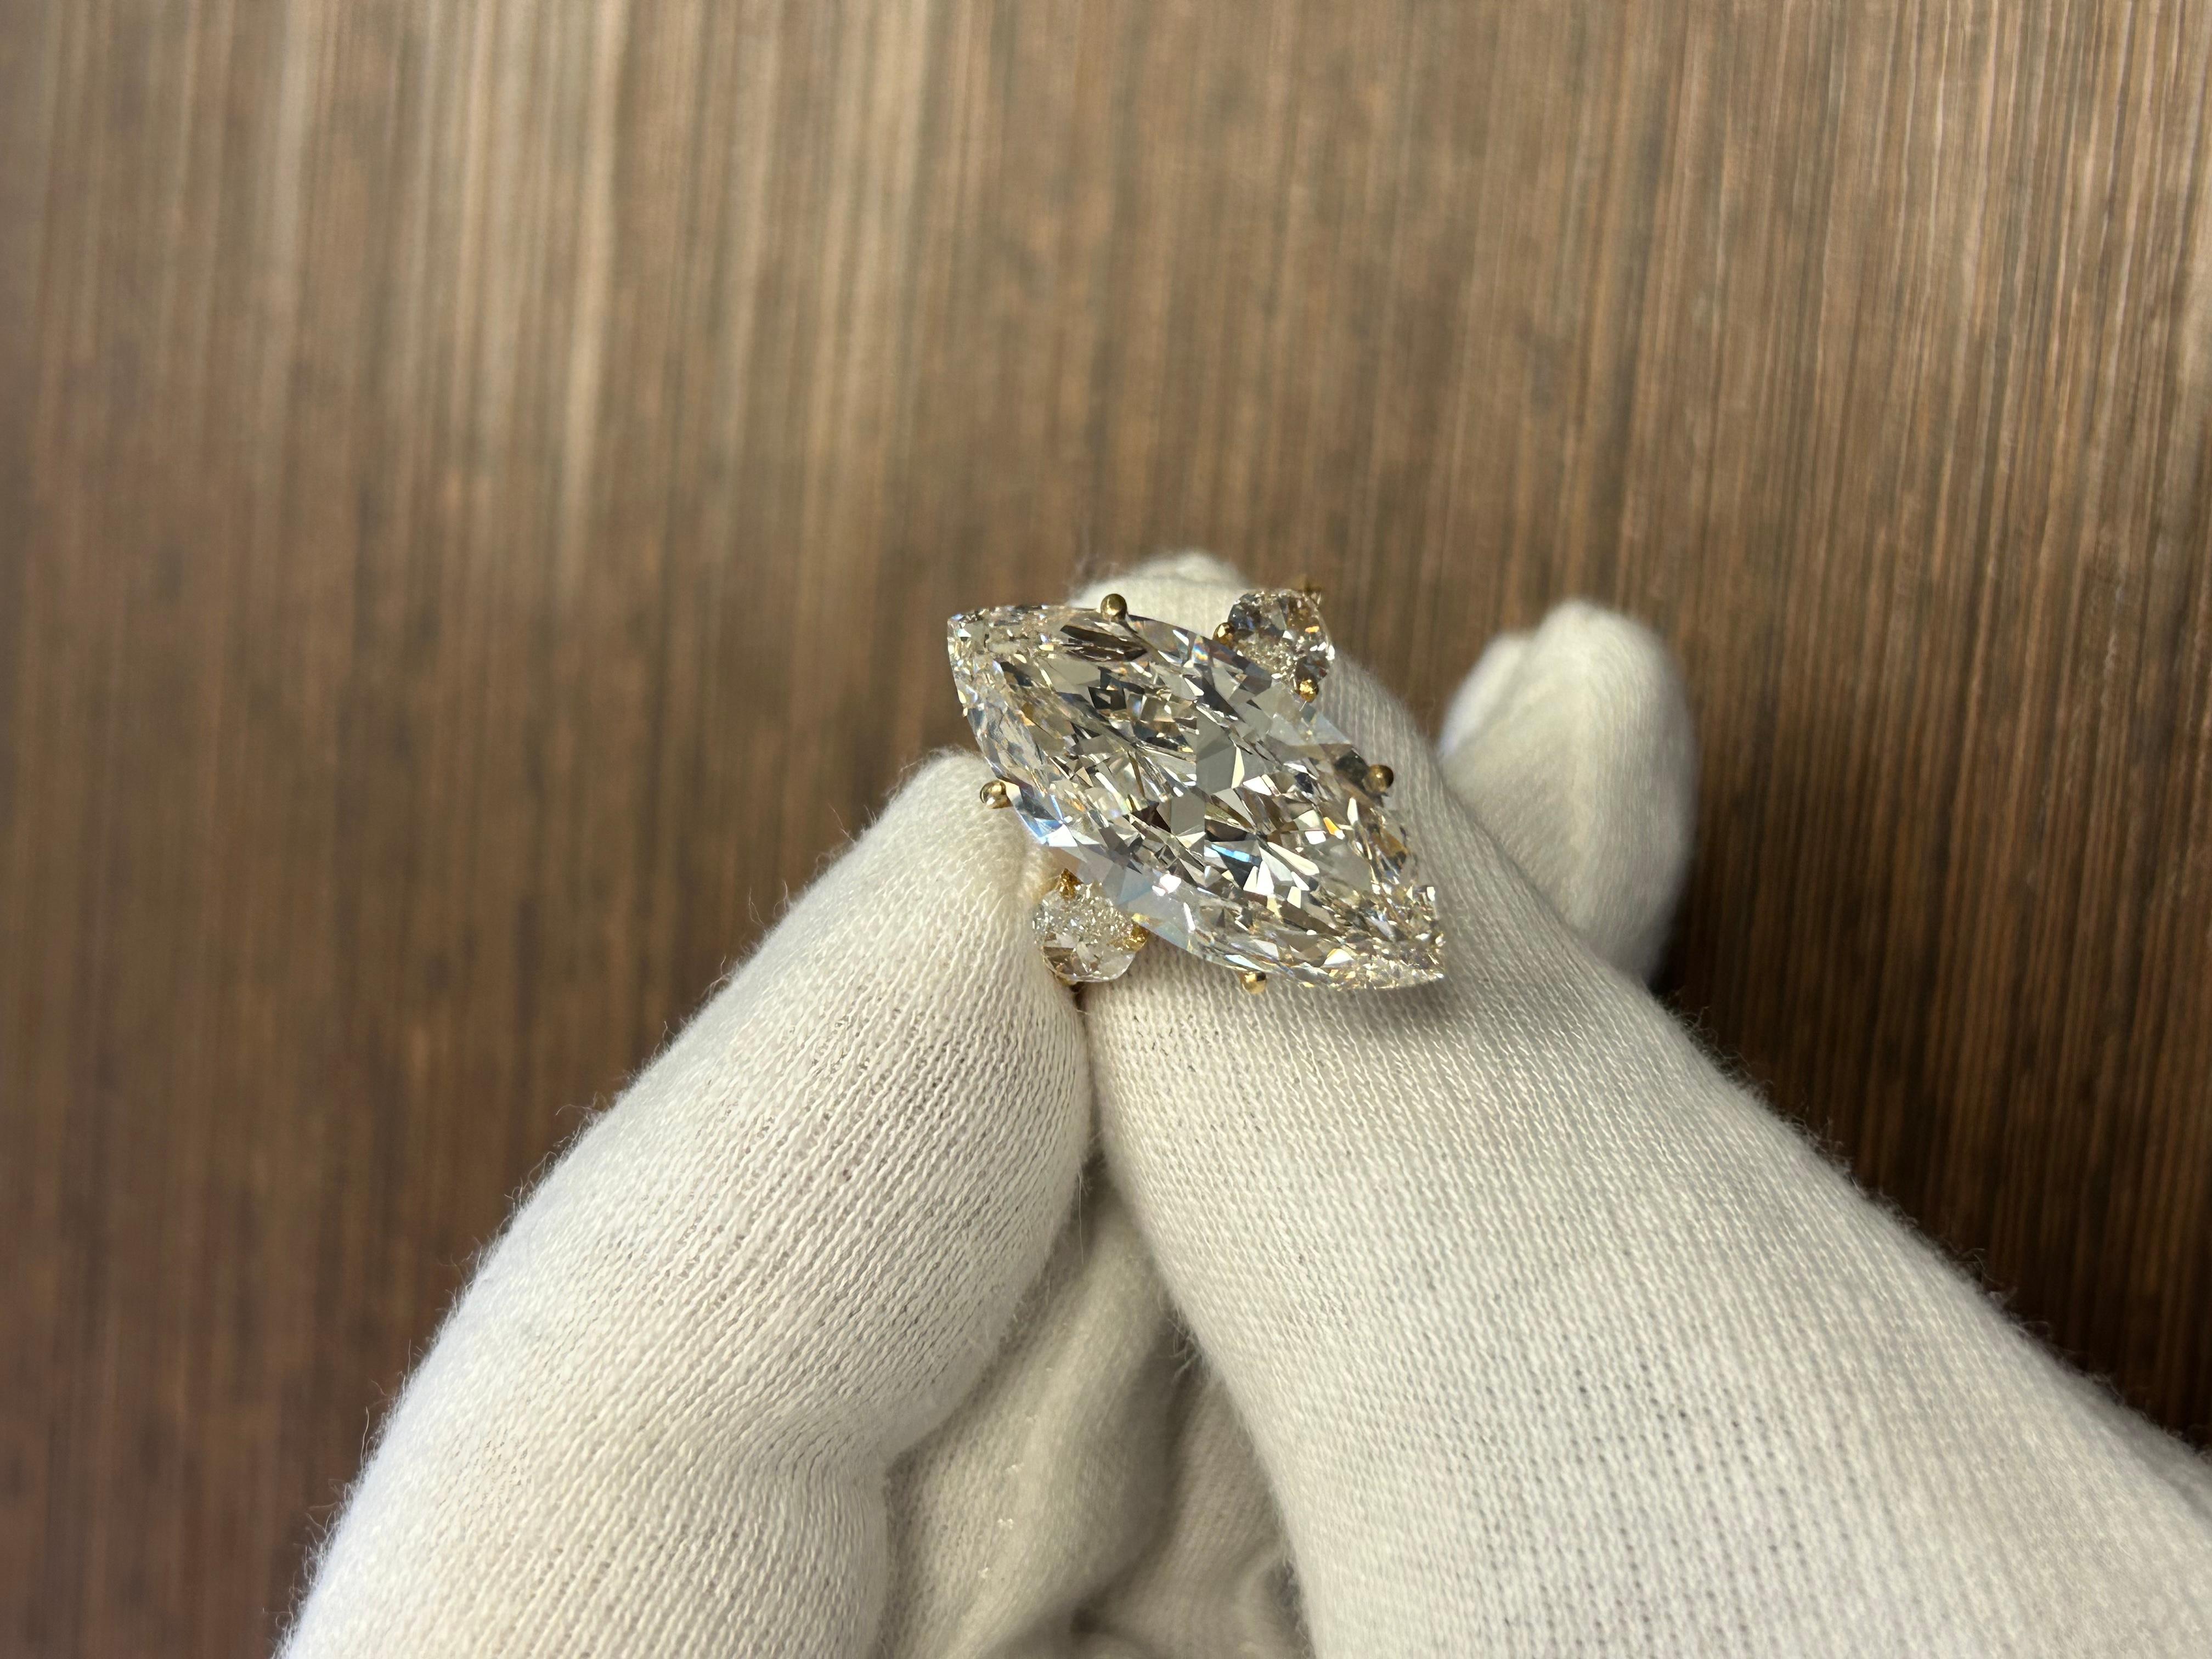 9.5 carat marquise diamond ring